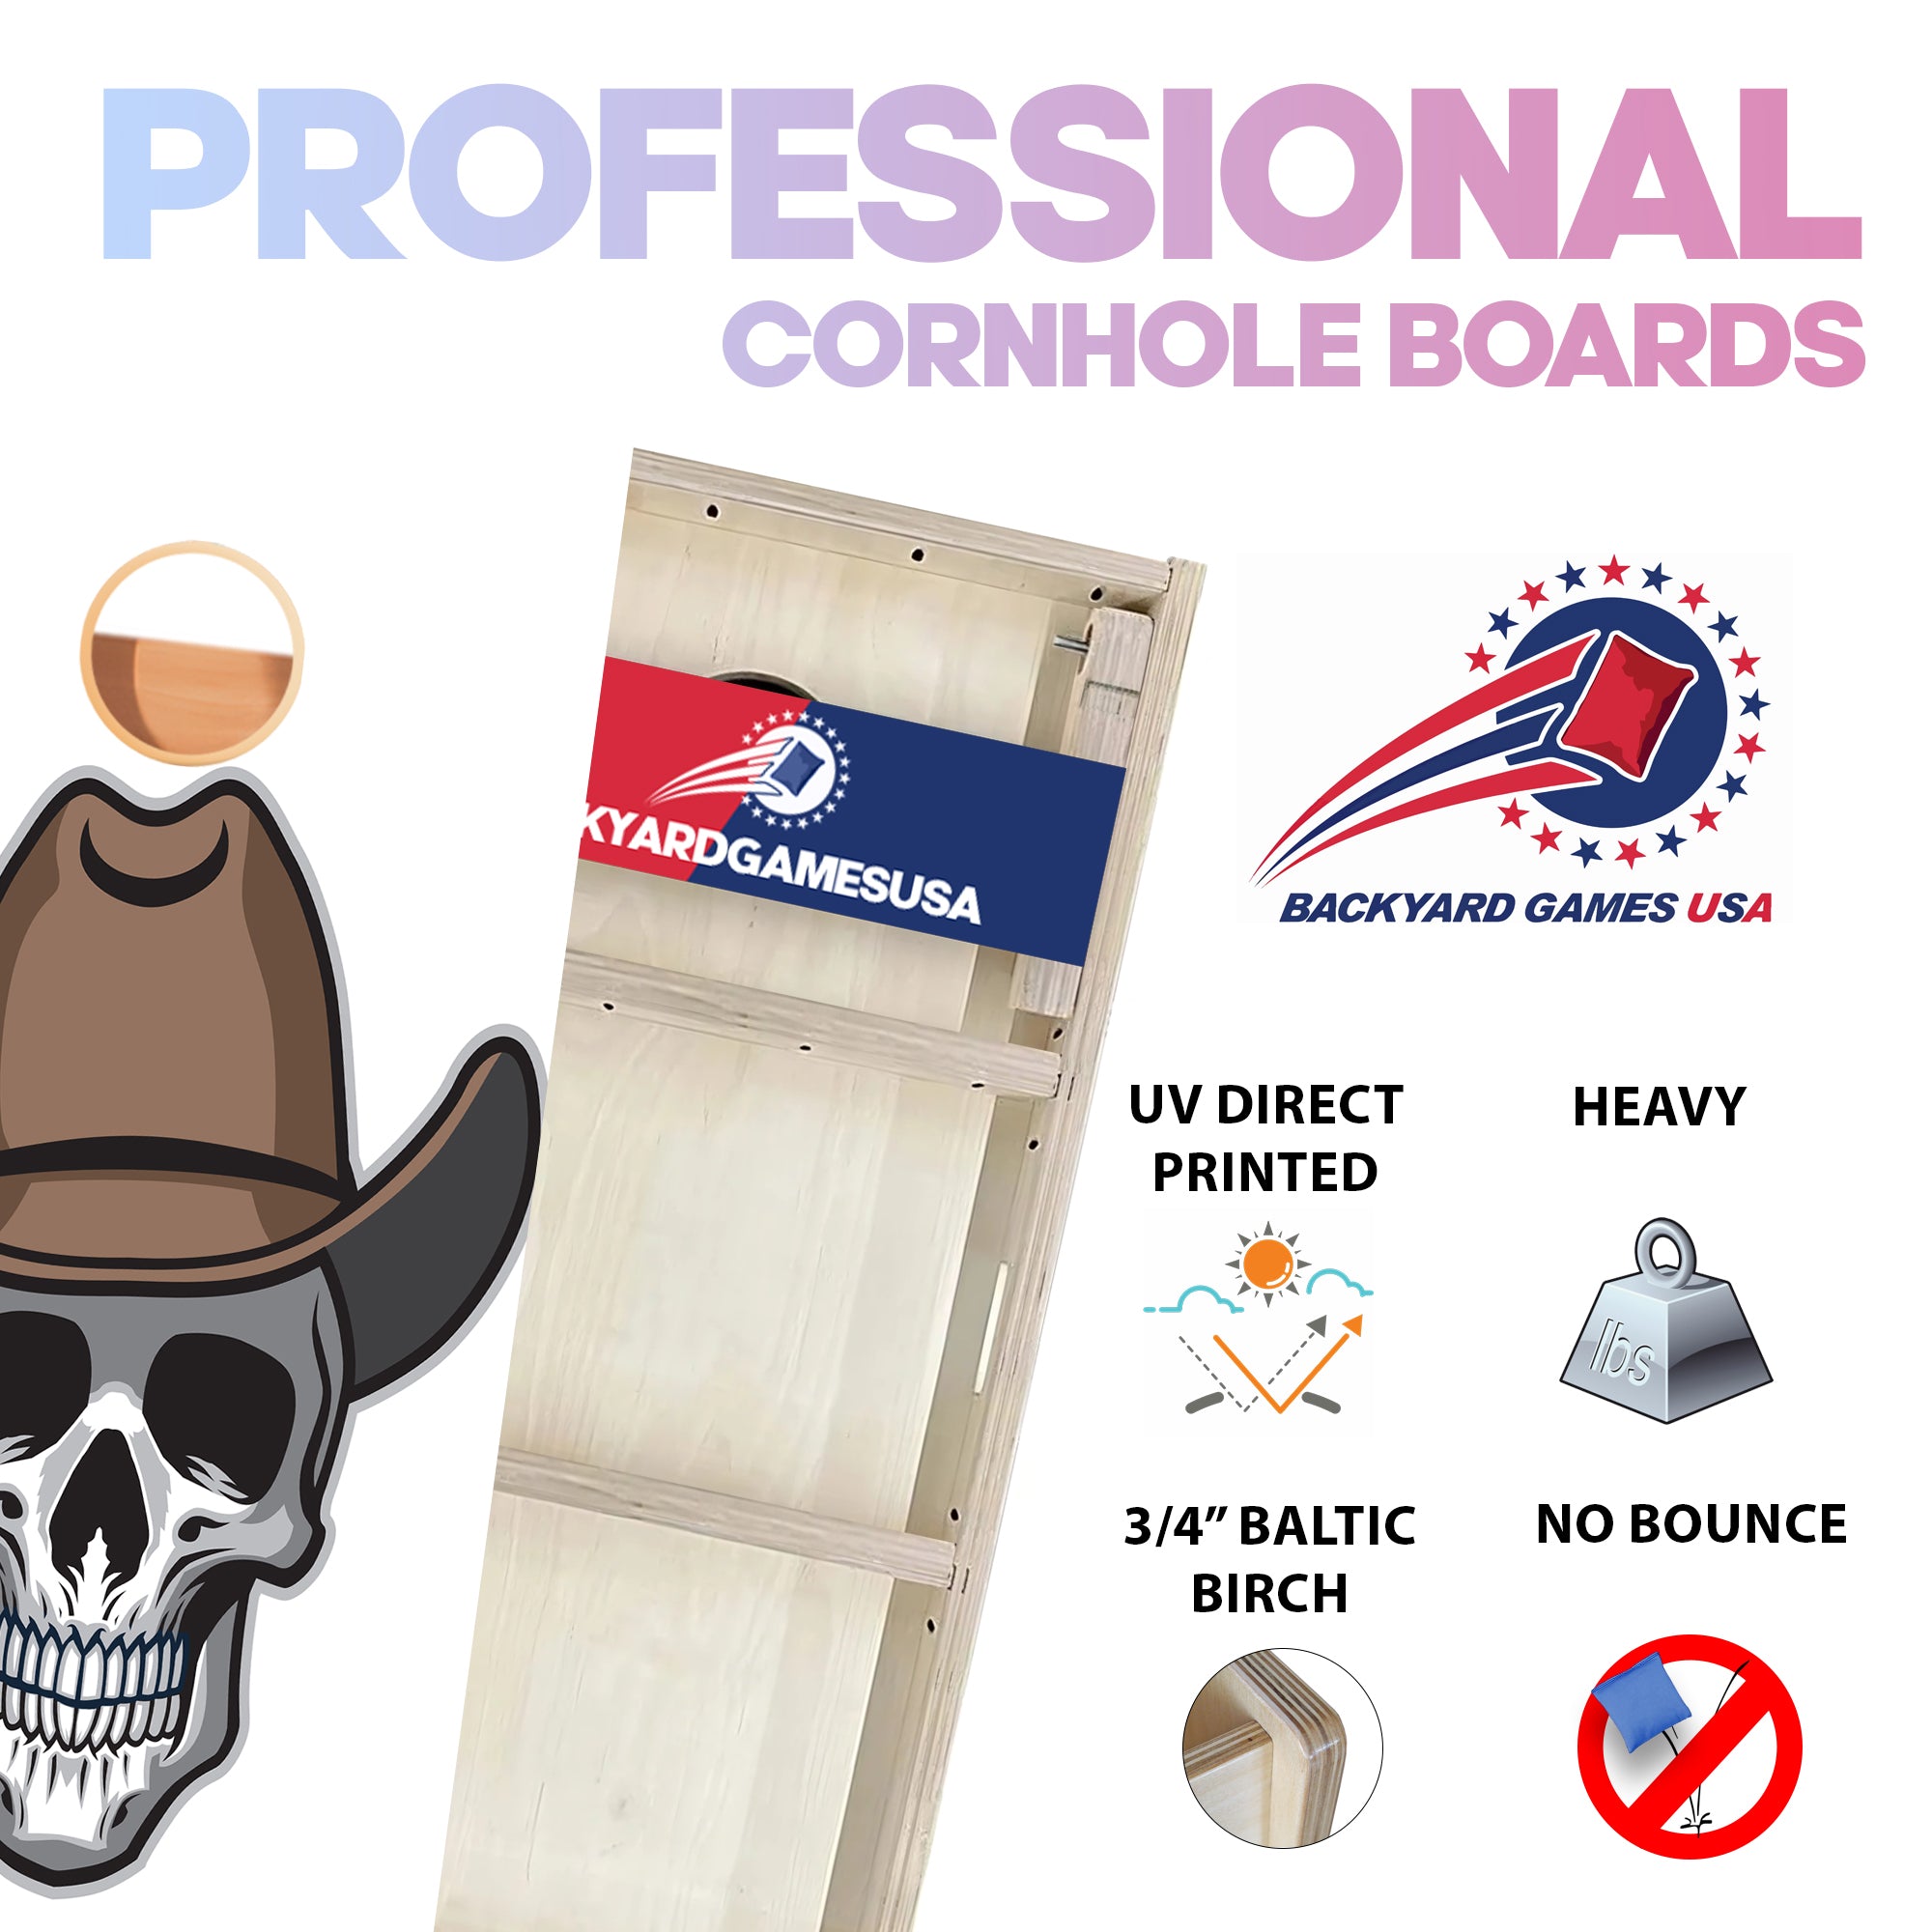 Cowboy Skull Professional Cornhole Boards